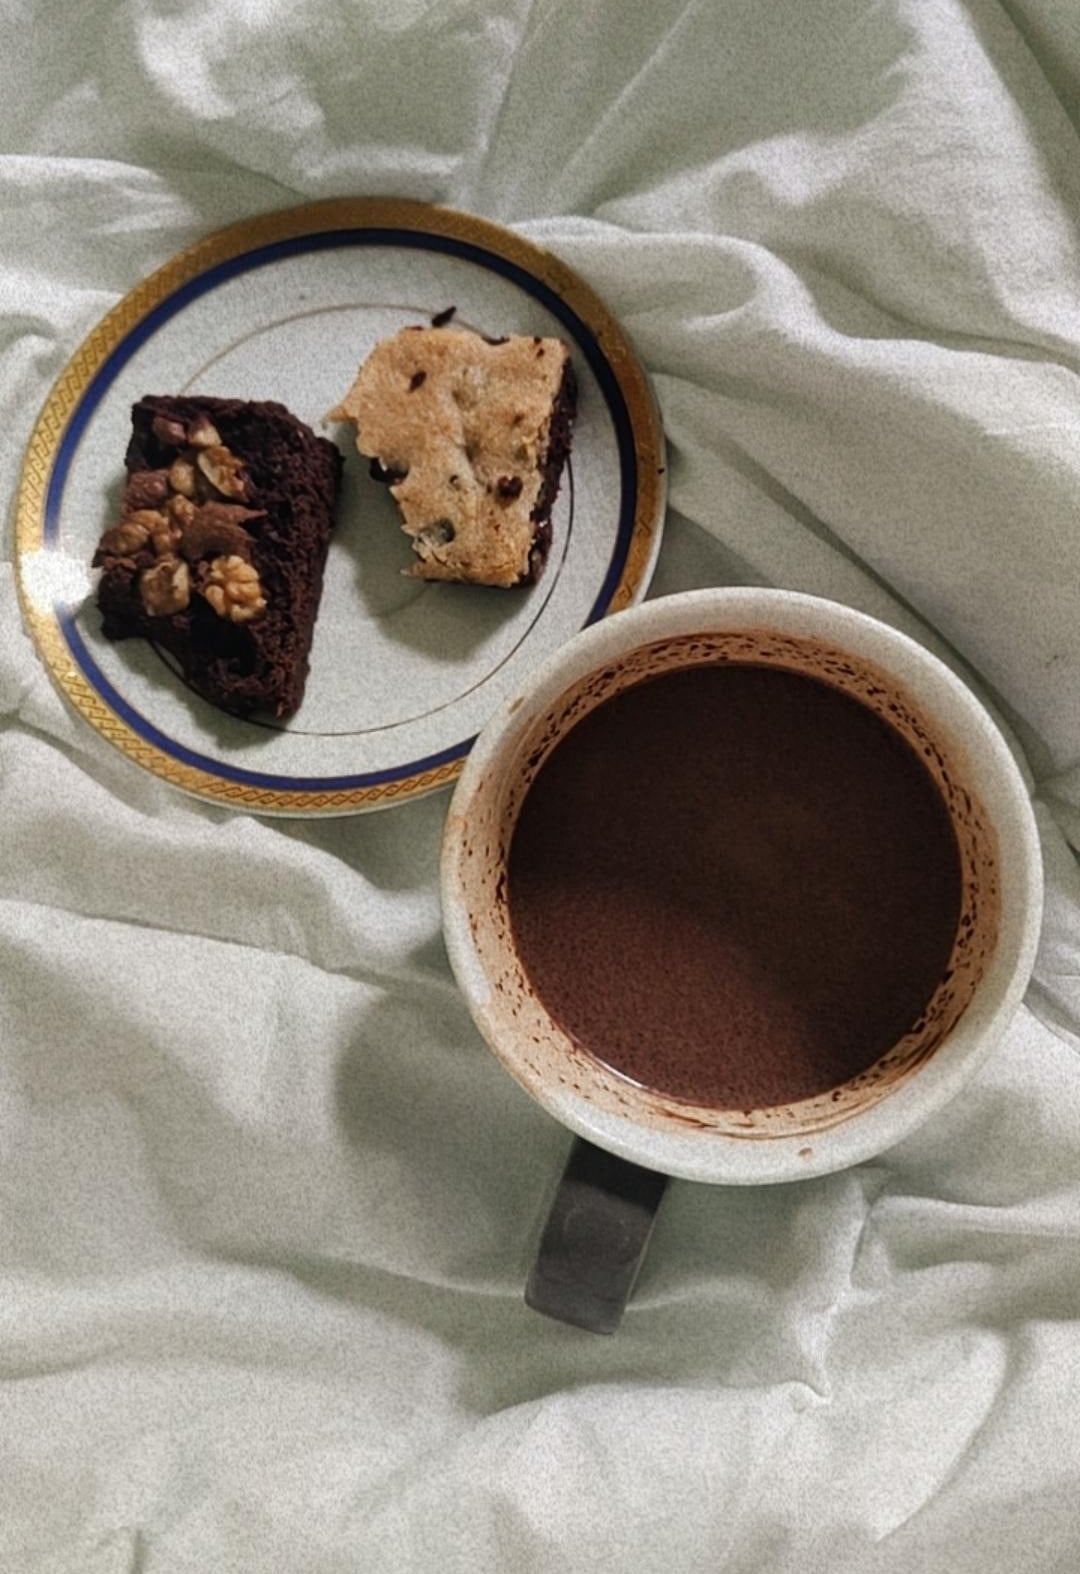 A mug of hot chocolate and plate of brownies.